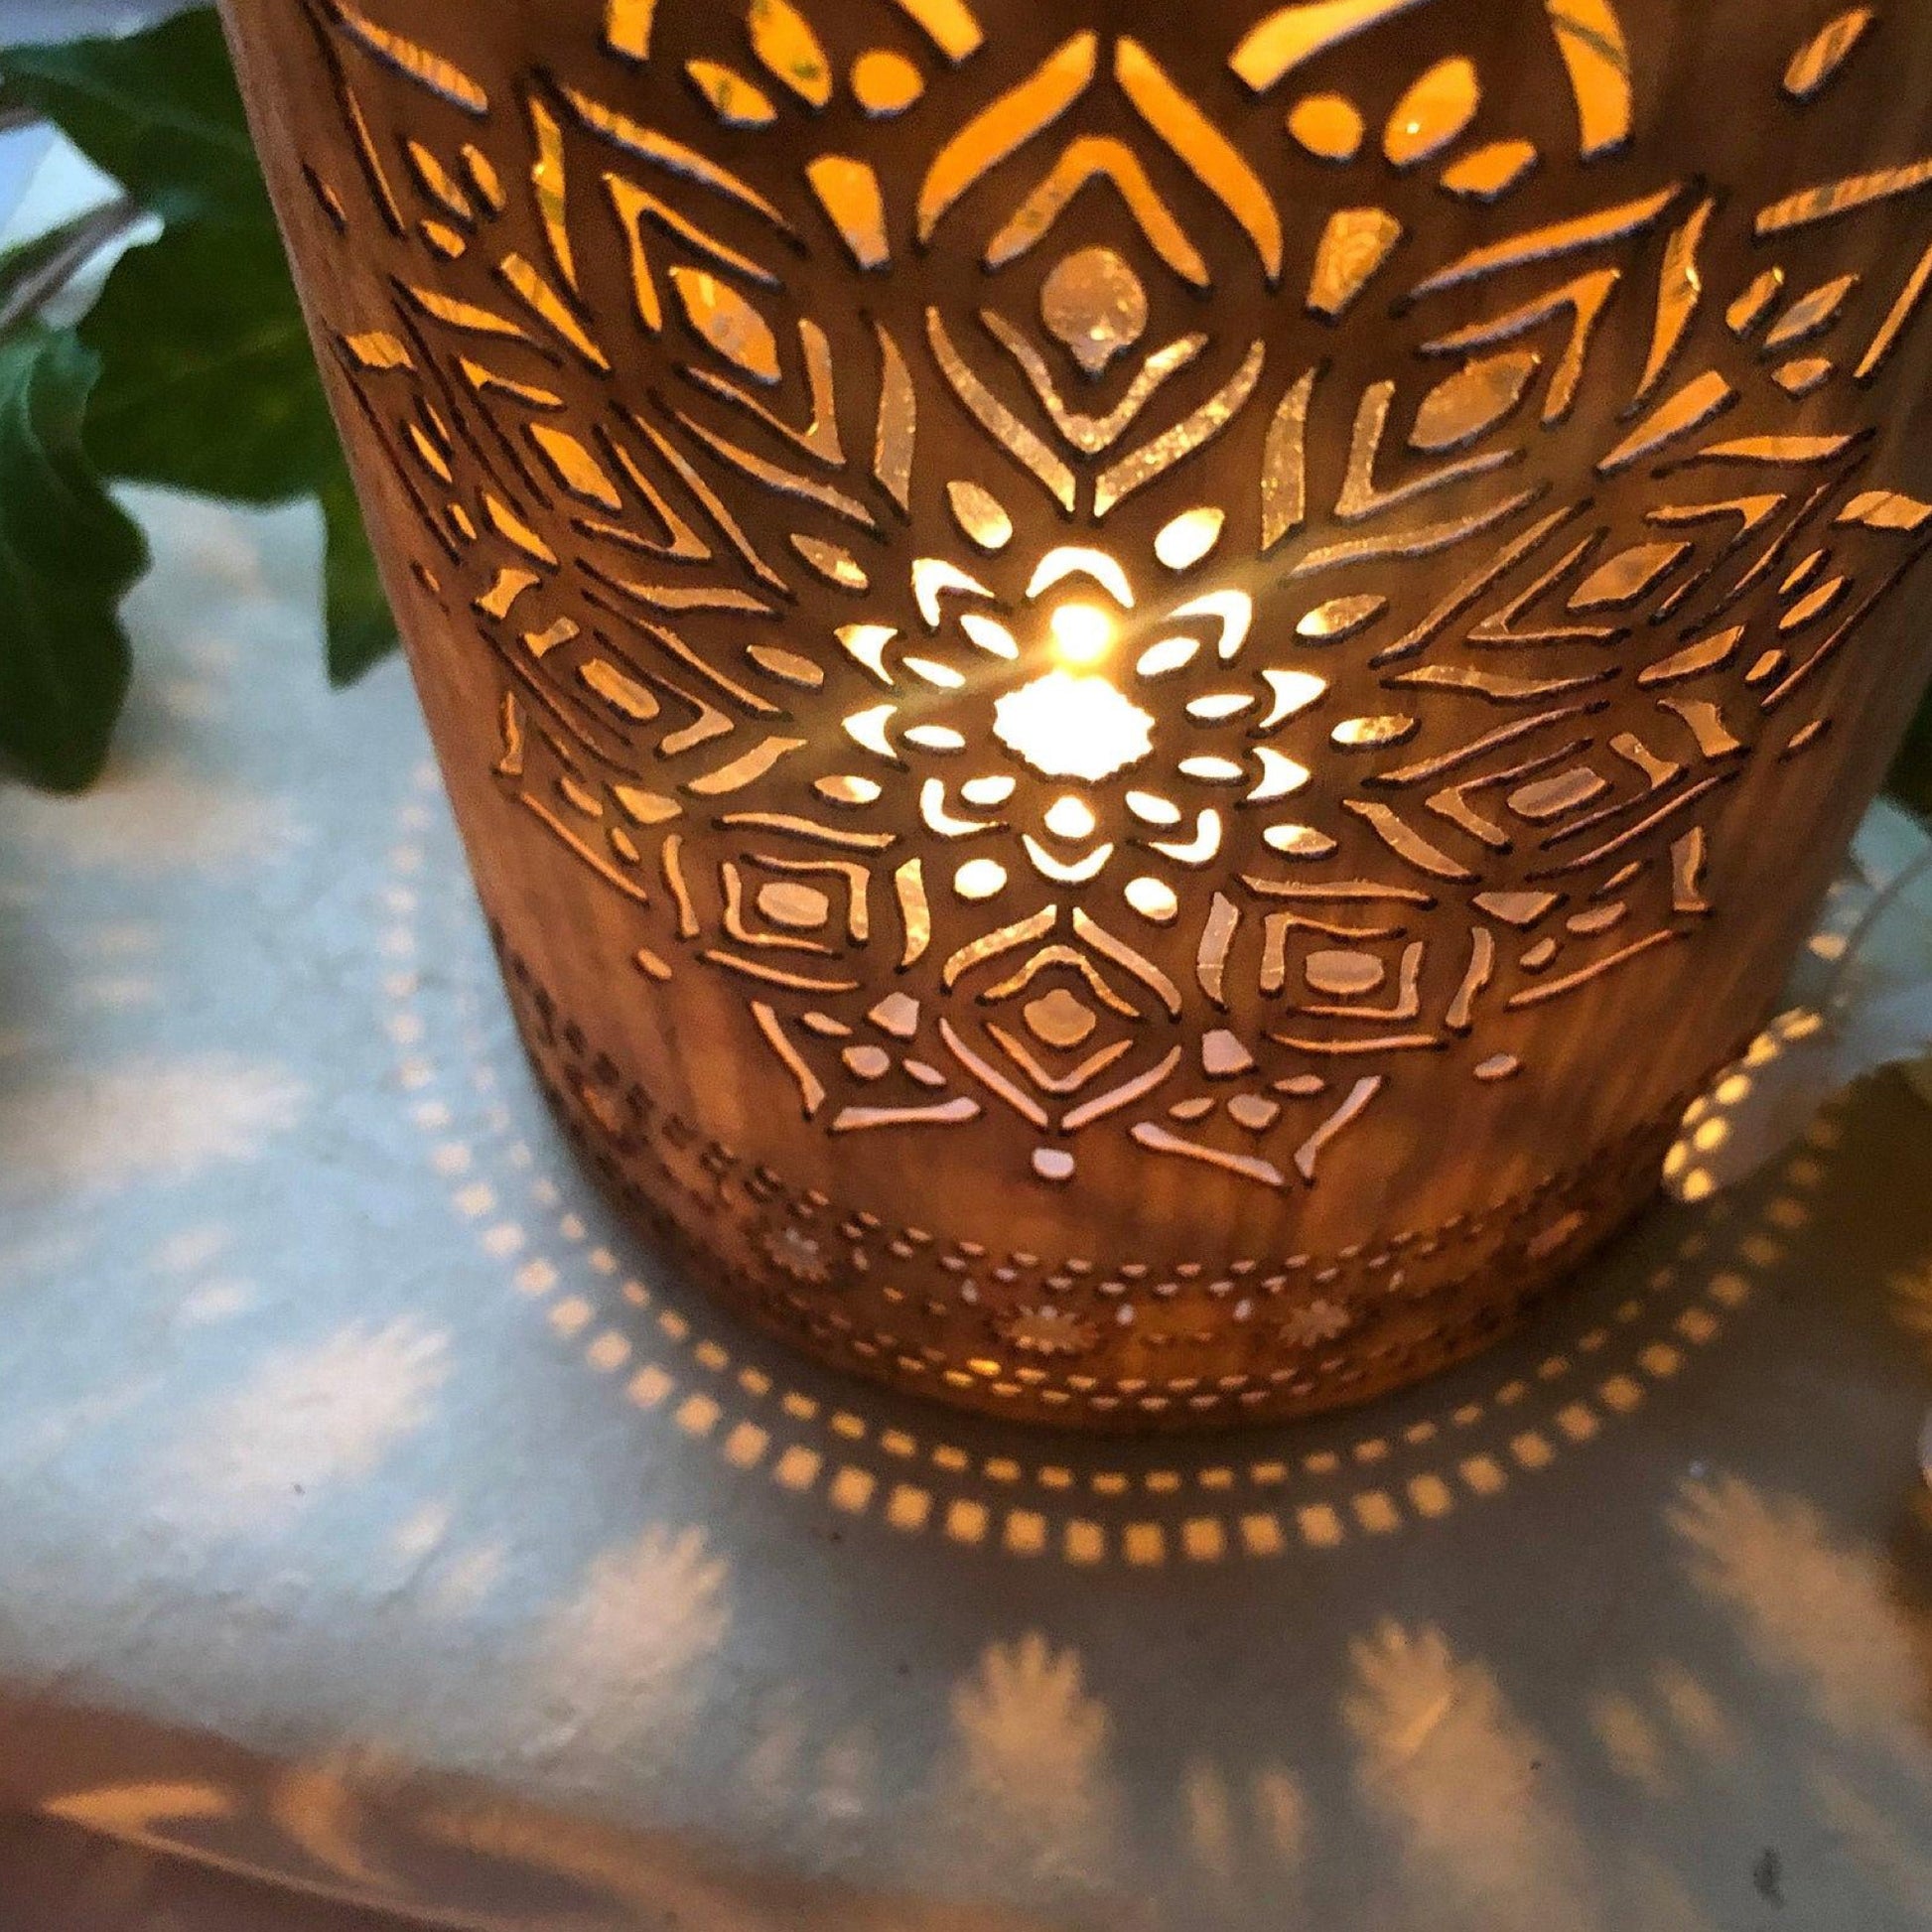 The mandala lantern - glass and natural maple, oak or walnut -